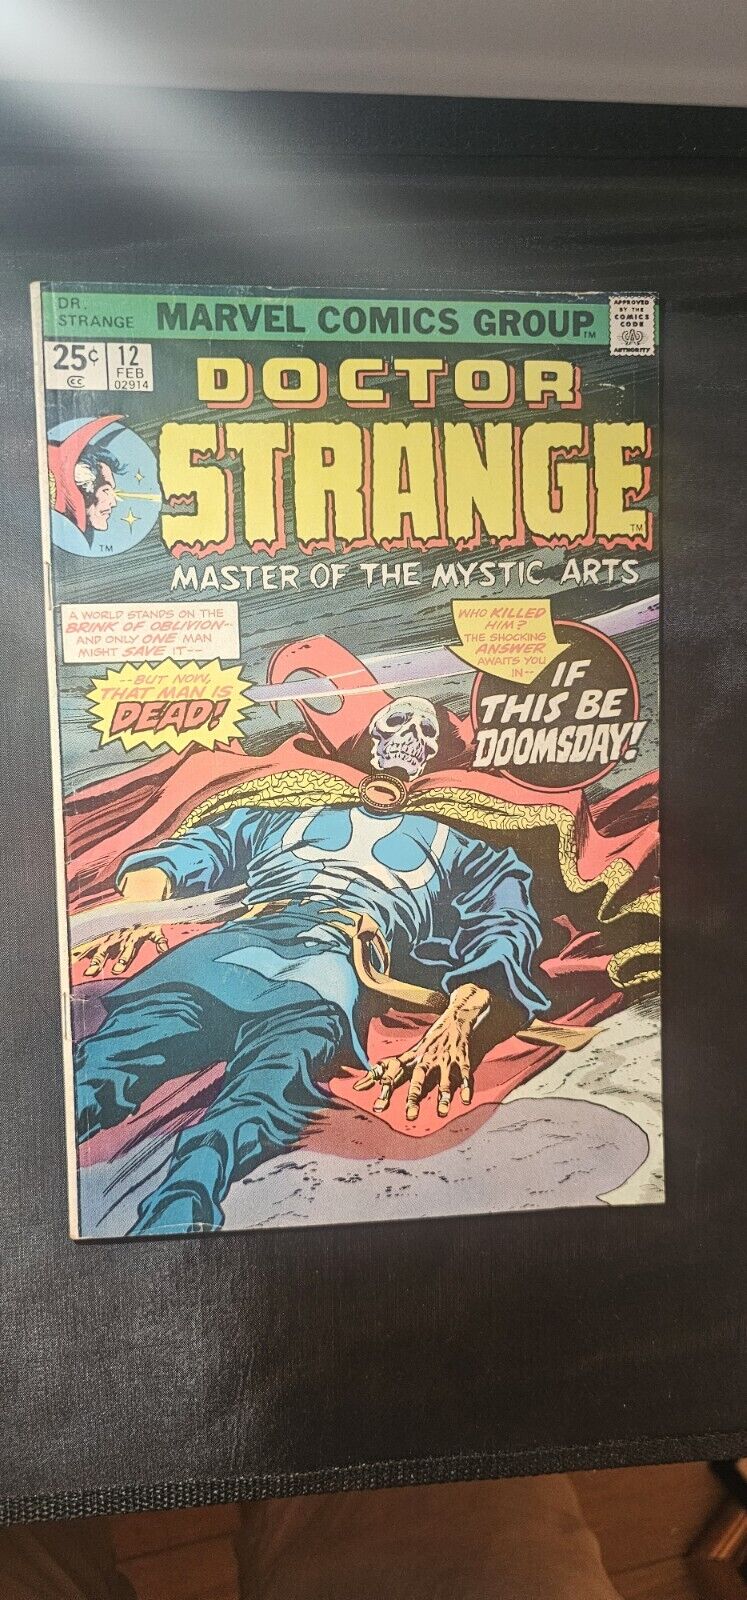 Doctor Strange #12 (Marvel 1975) Master of the Mystic Arts